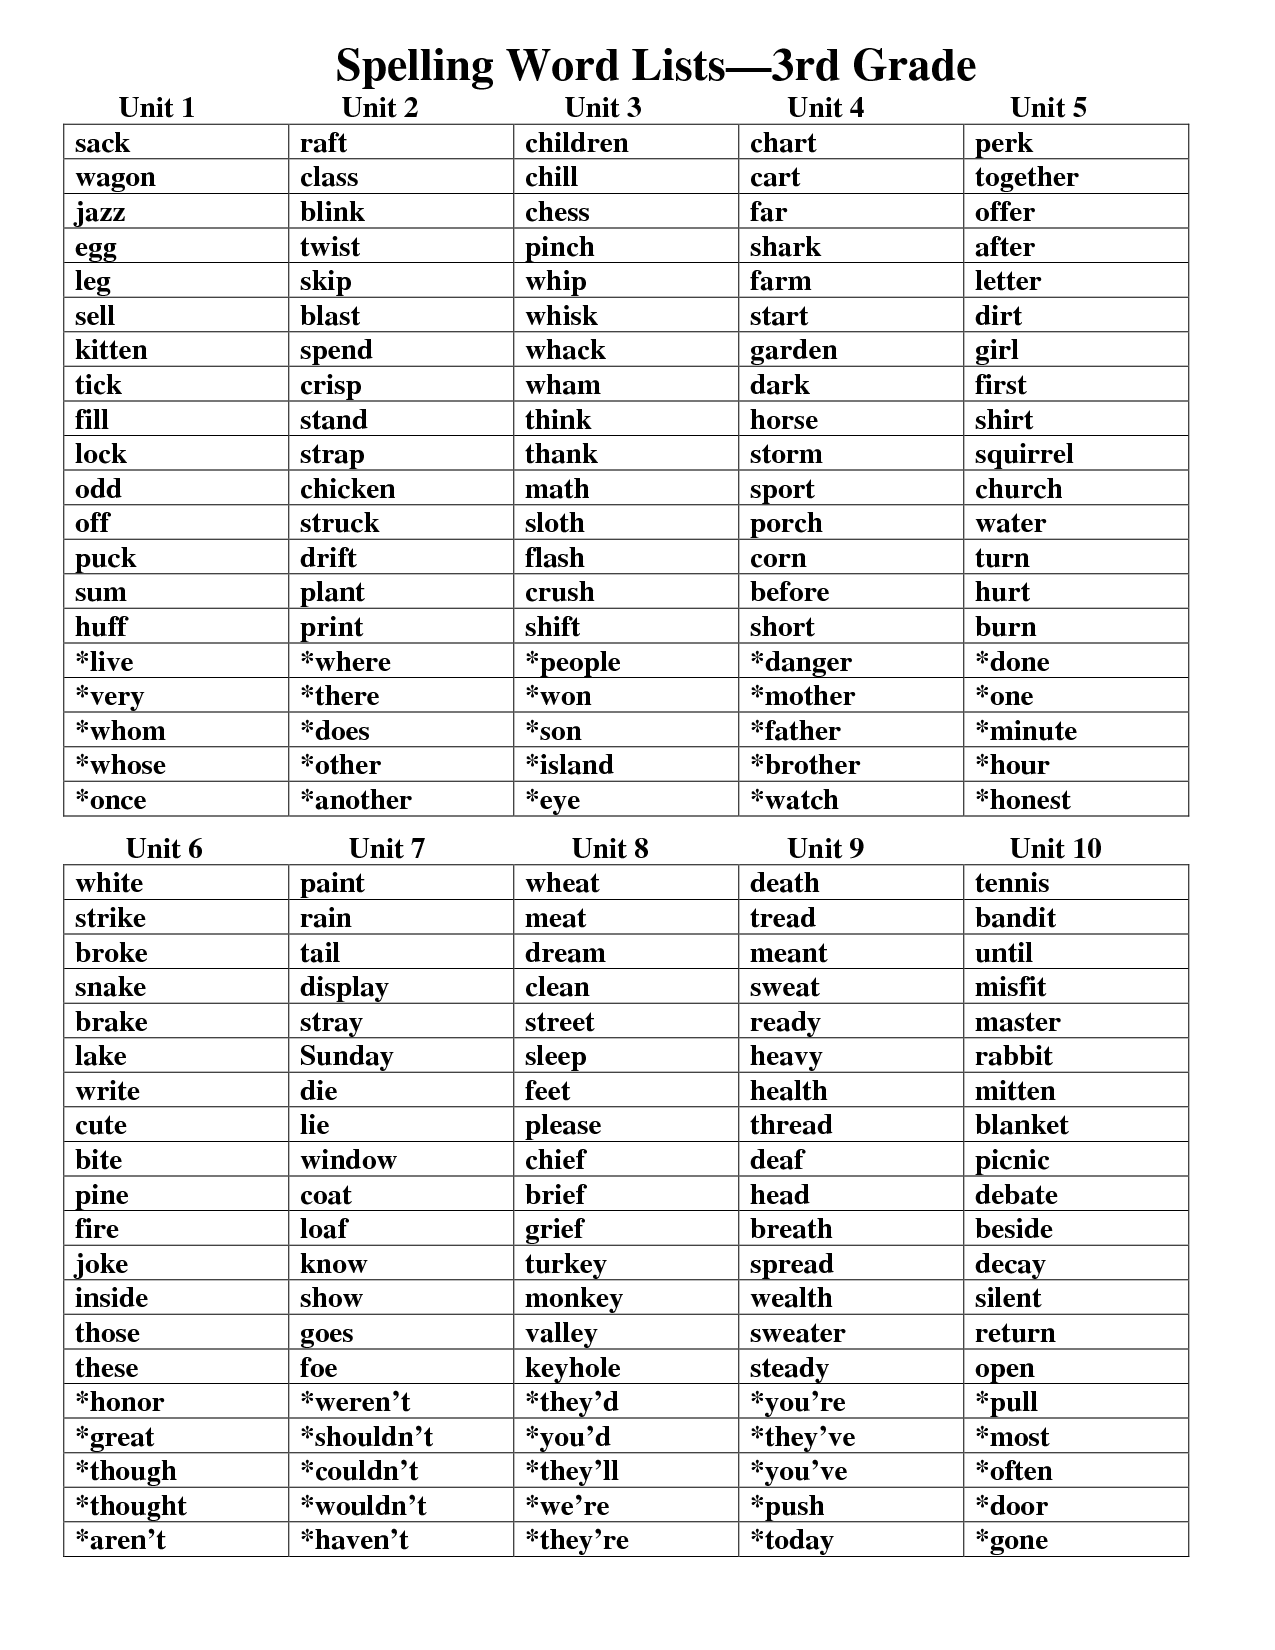 3rd Grade Spelling Words List Image